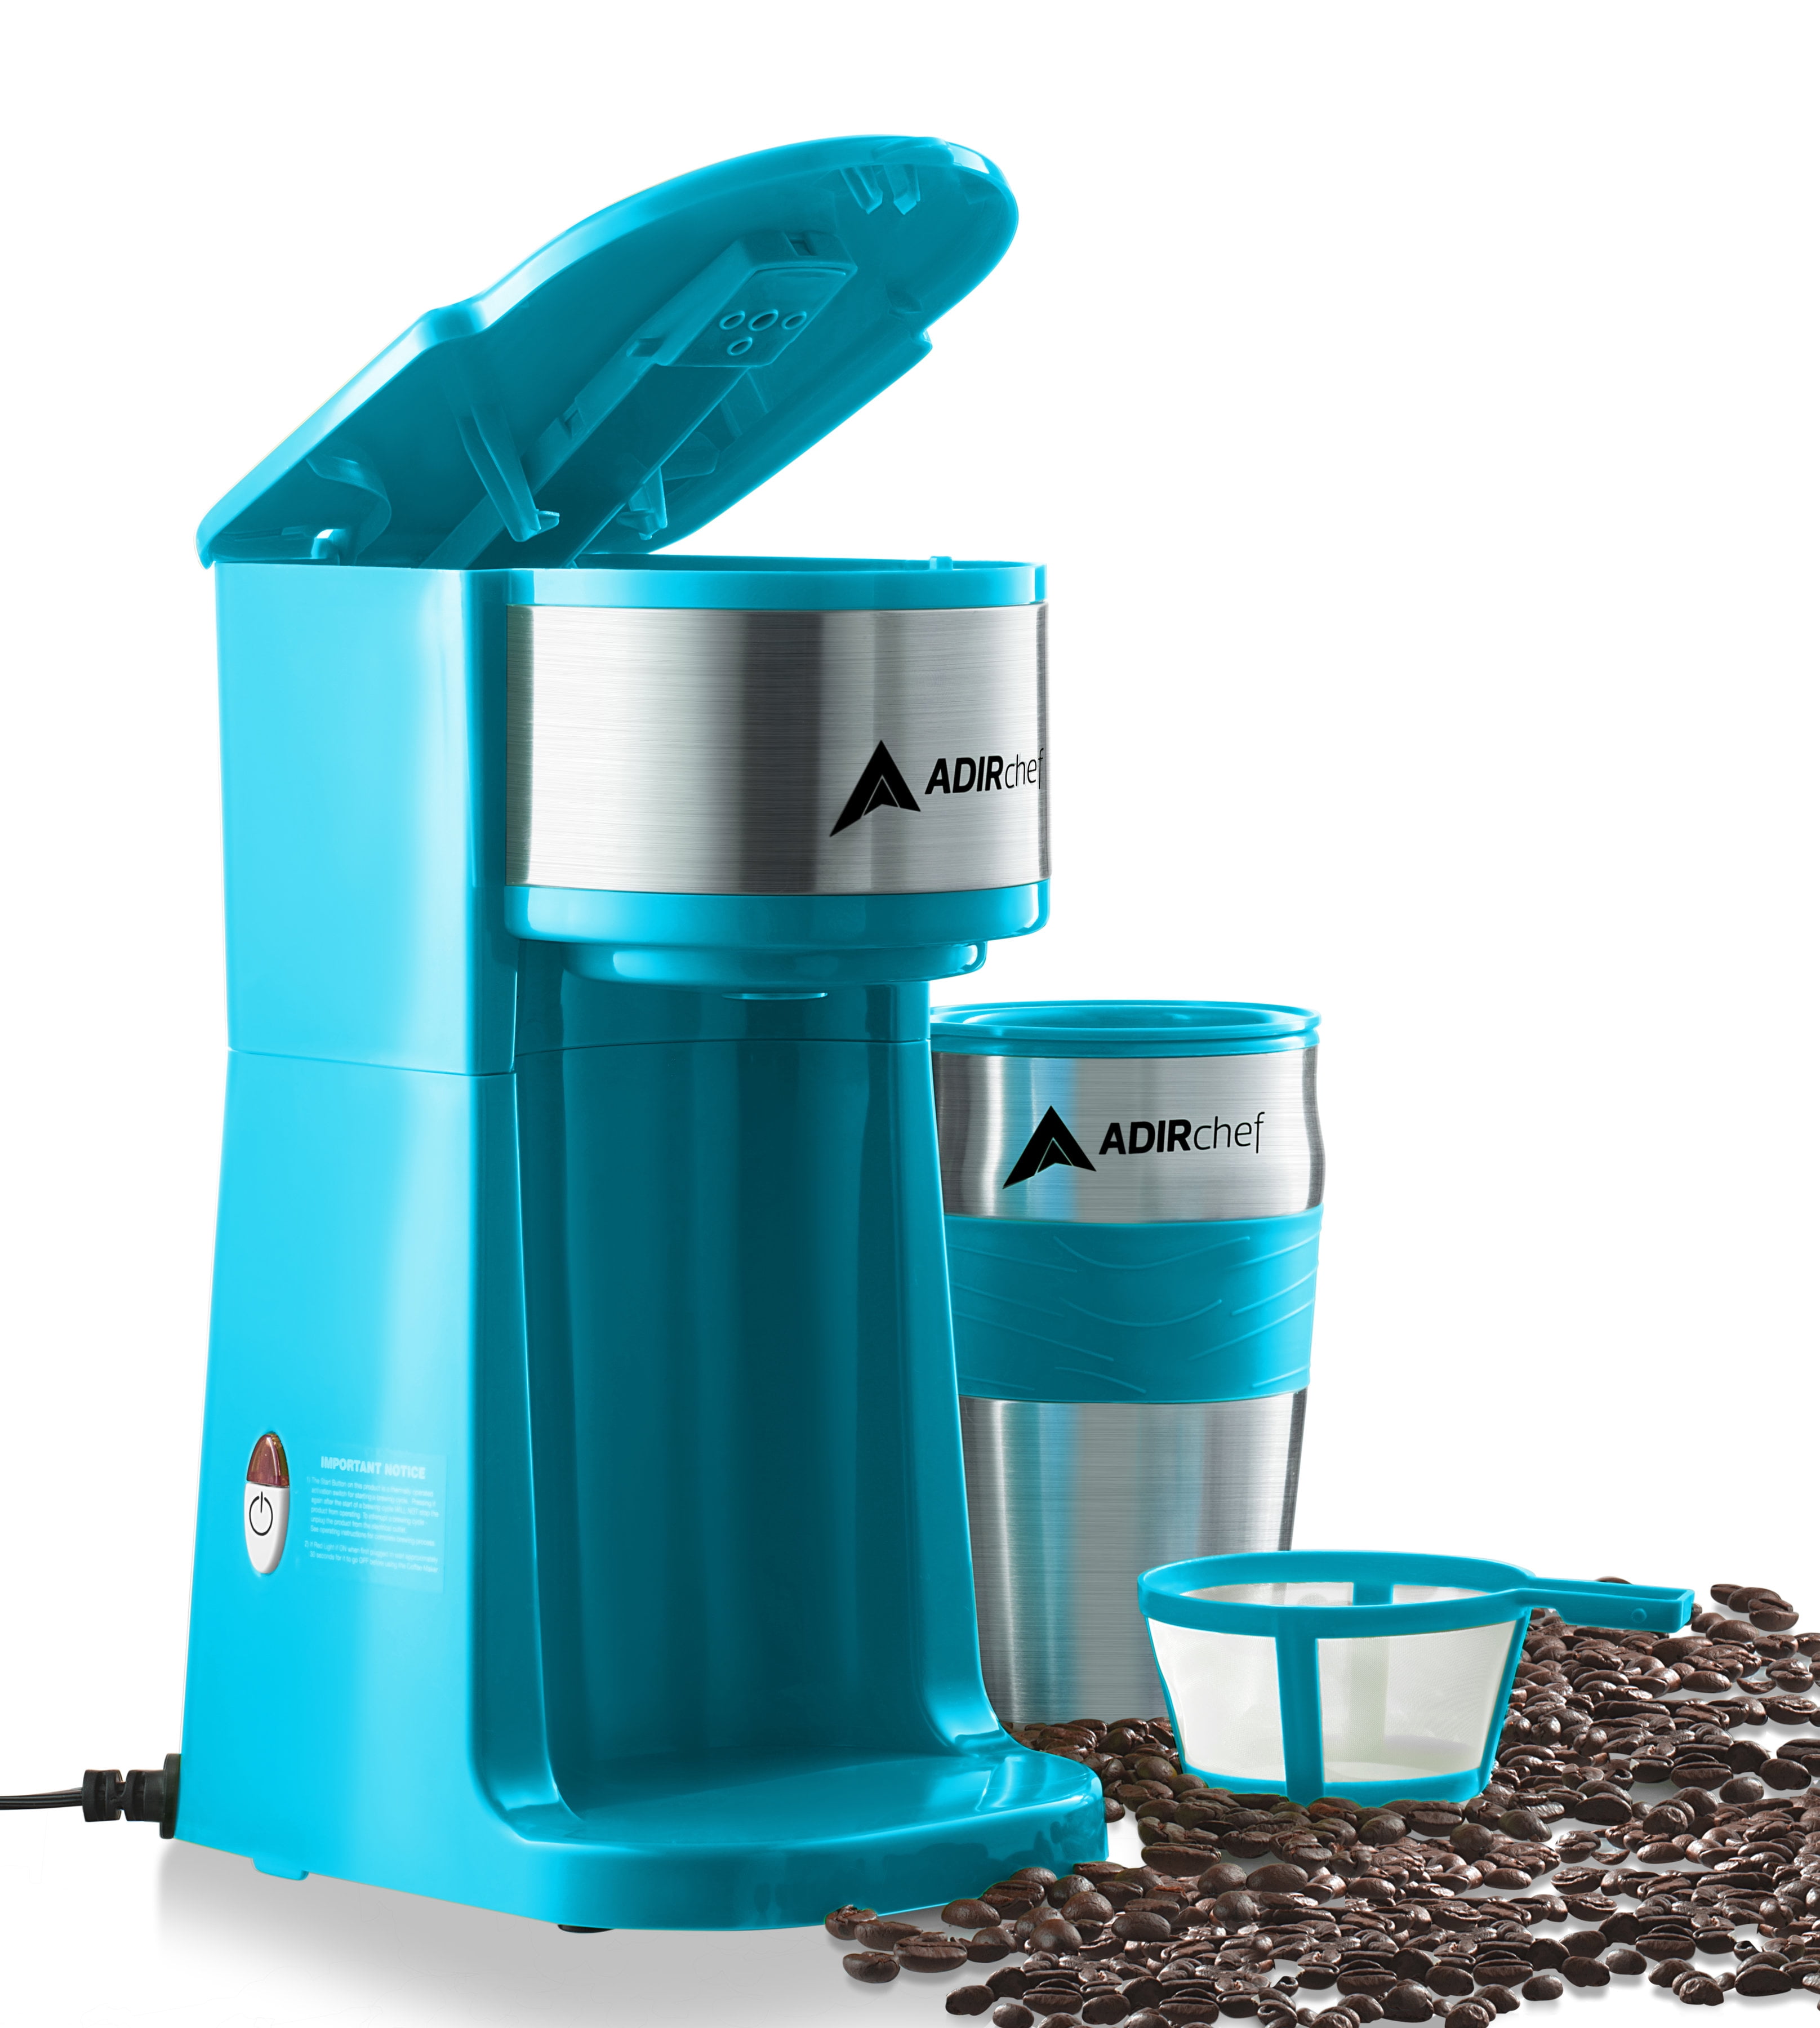 avigator Small Coffee Maker-Single Serve Coffee Maker, Single Cup Coffee  Maker with 10oz Travel Coffee Tumbler & Reusable Filter for Home, Office